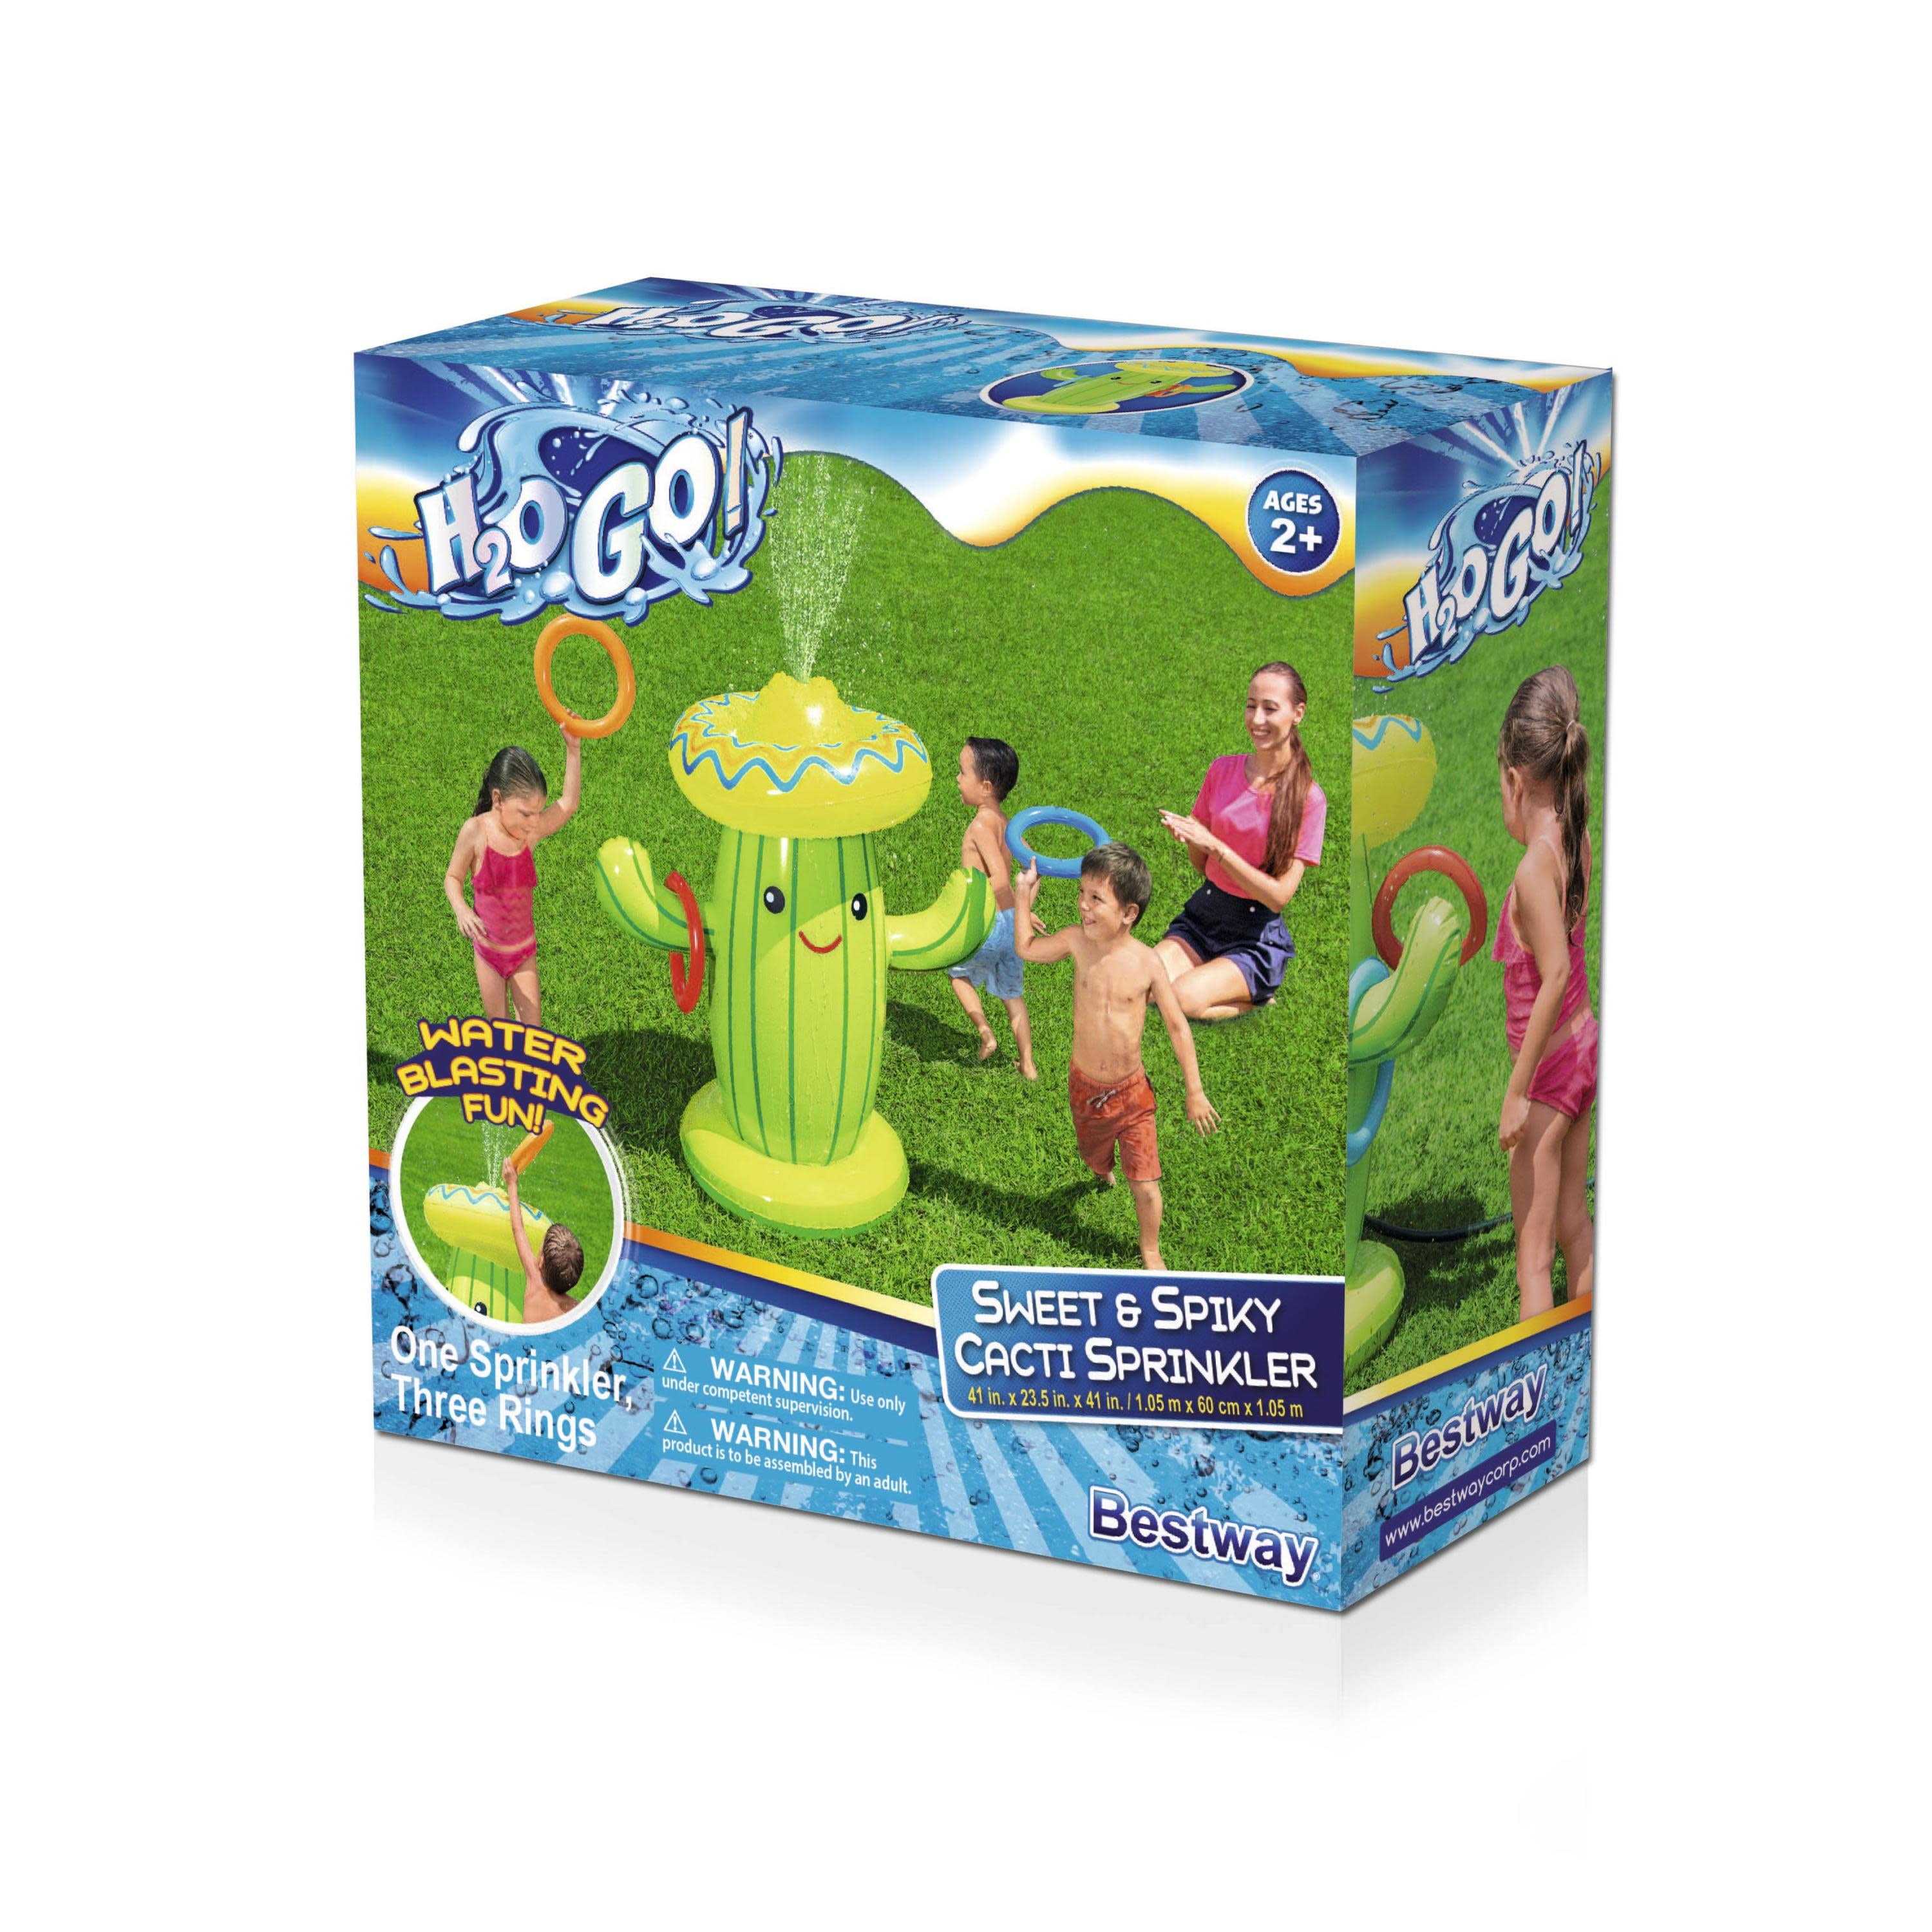 Sweet Kids Spiky Inflatable Sprinkler & H2OGO! Cacti